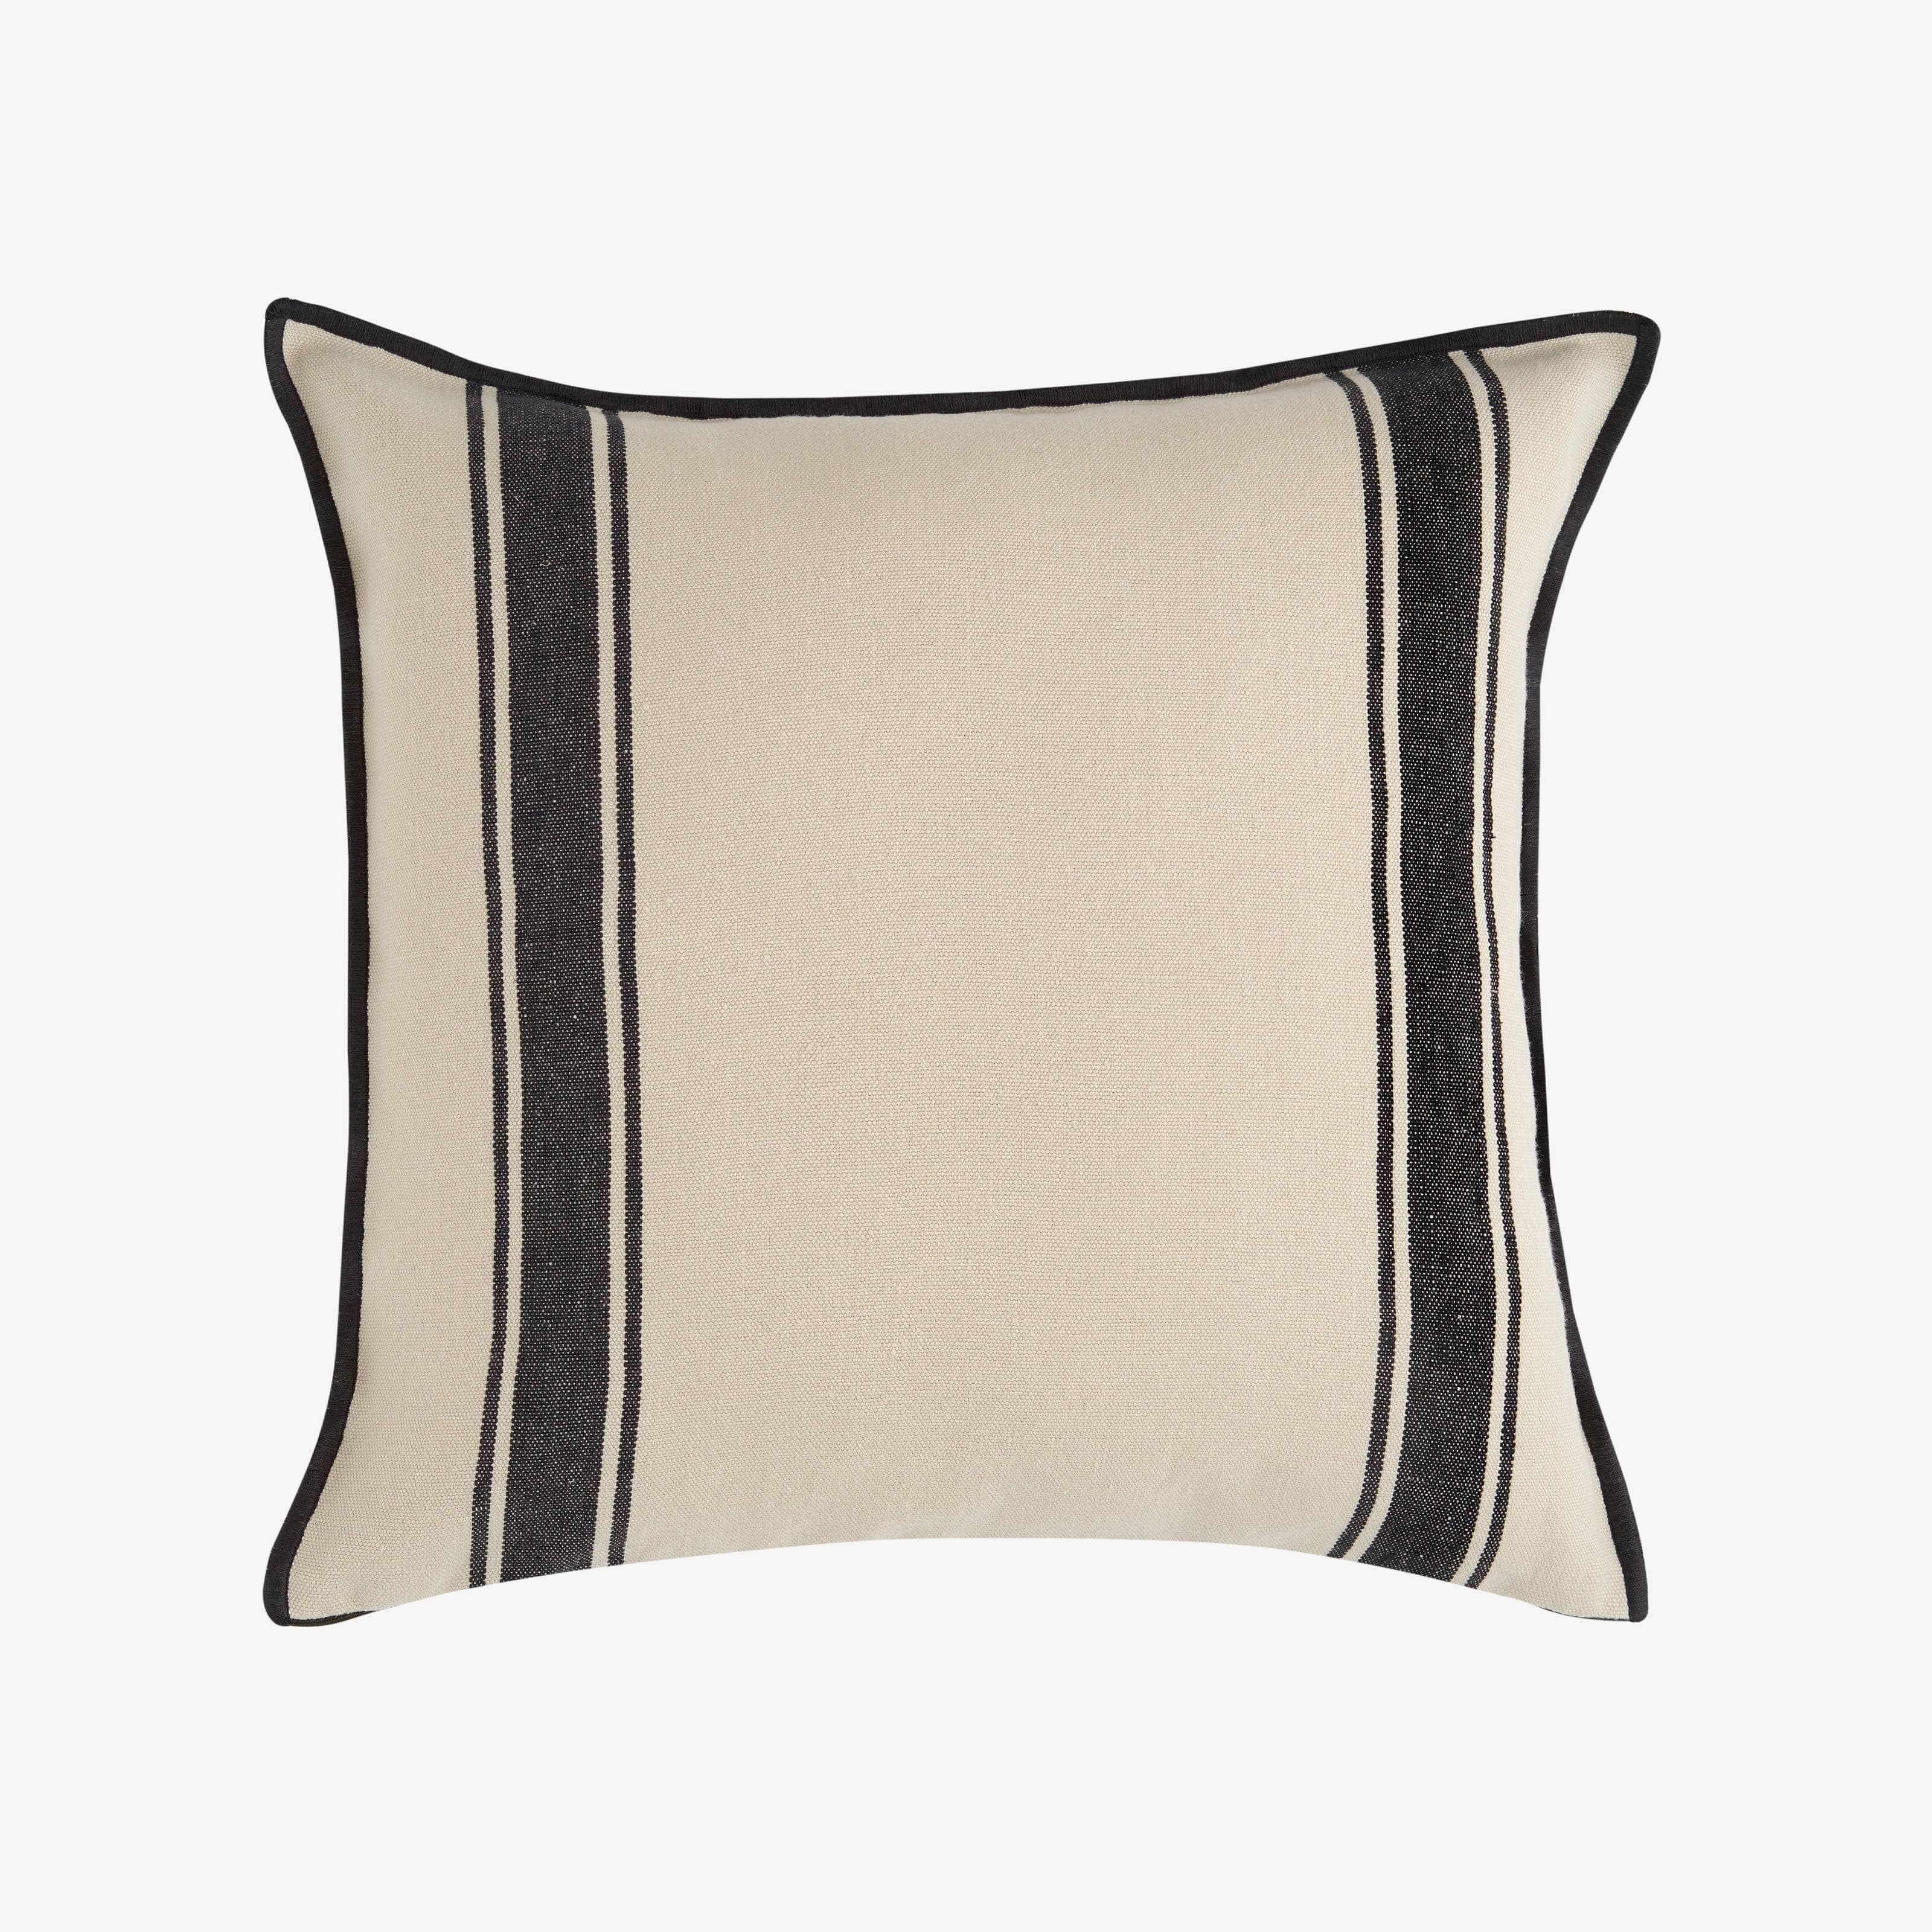 Lido Striped Linen Cushion Cover, Natural - Black, 45x45 cm - 1